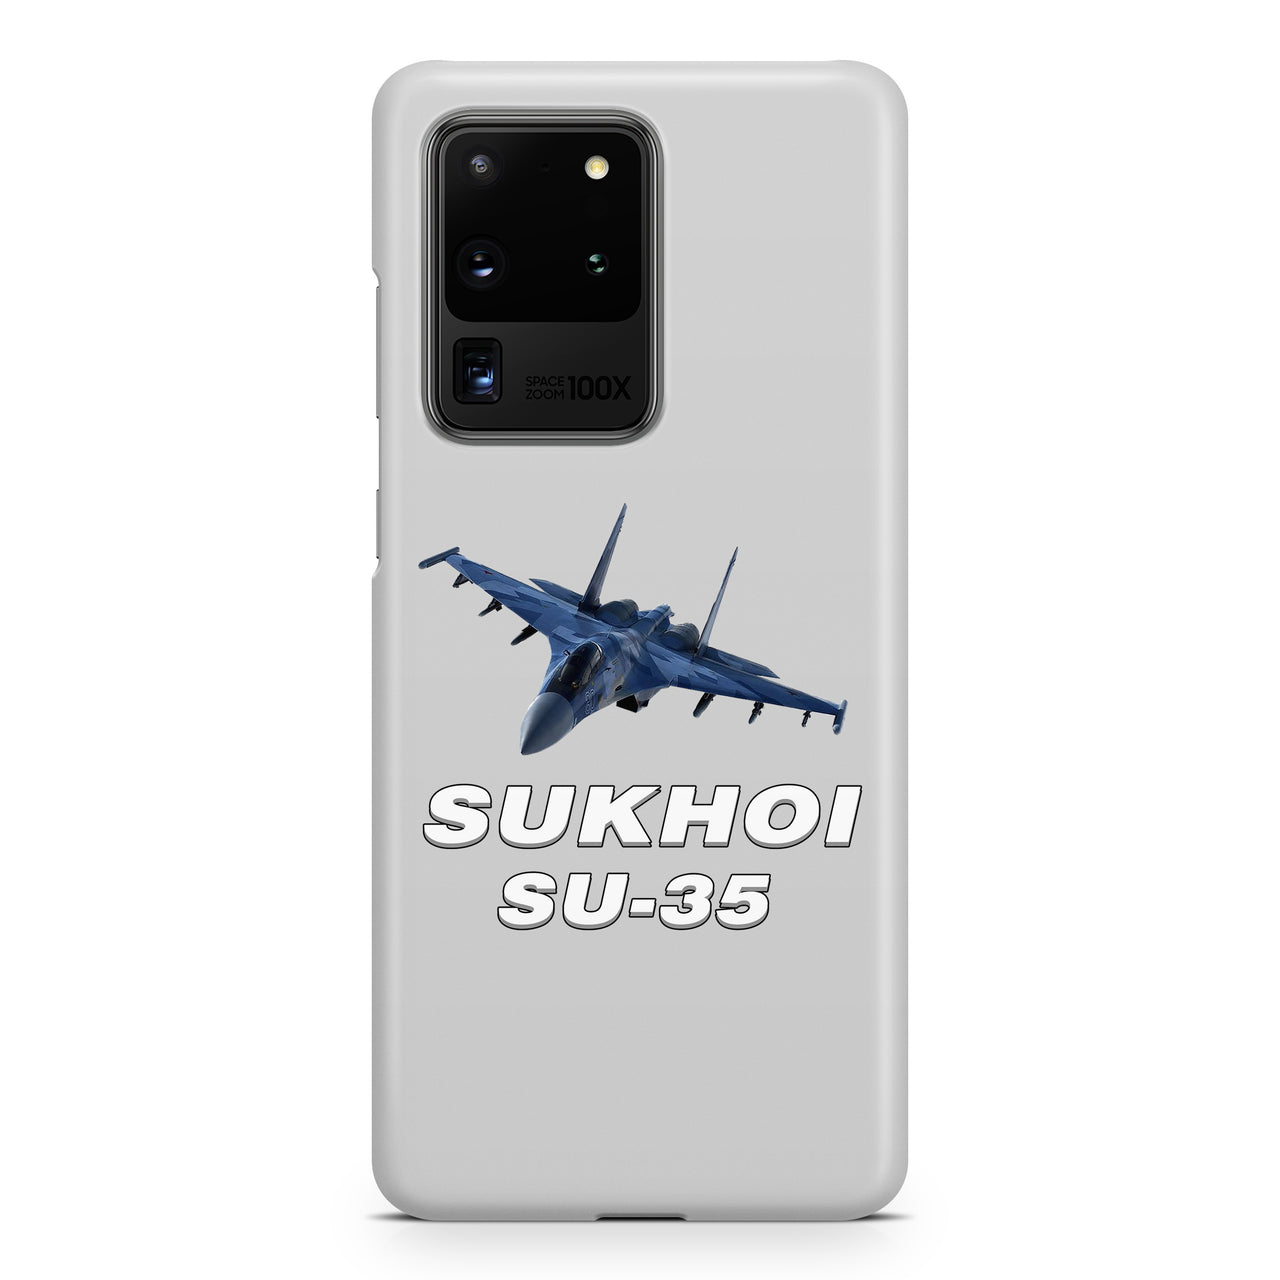 The Sukhoi SU-35 Samsung S & Note Cases